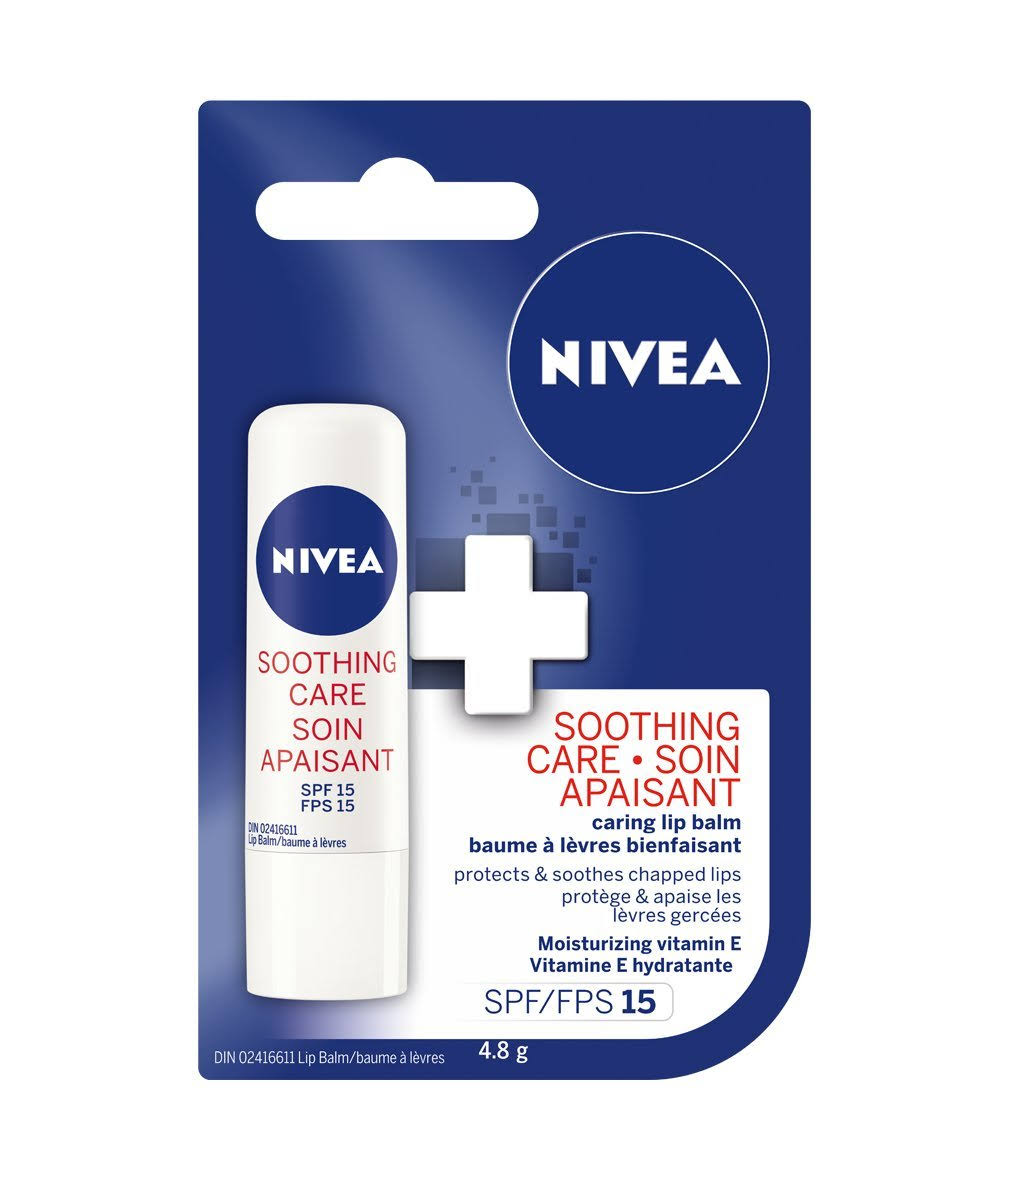 Nivea Soothing Care Lip Balm - 4.8g